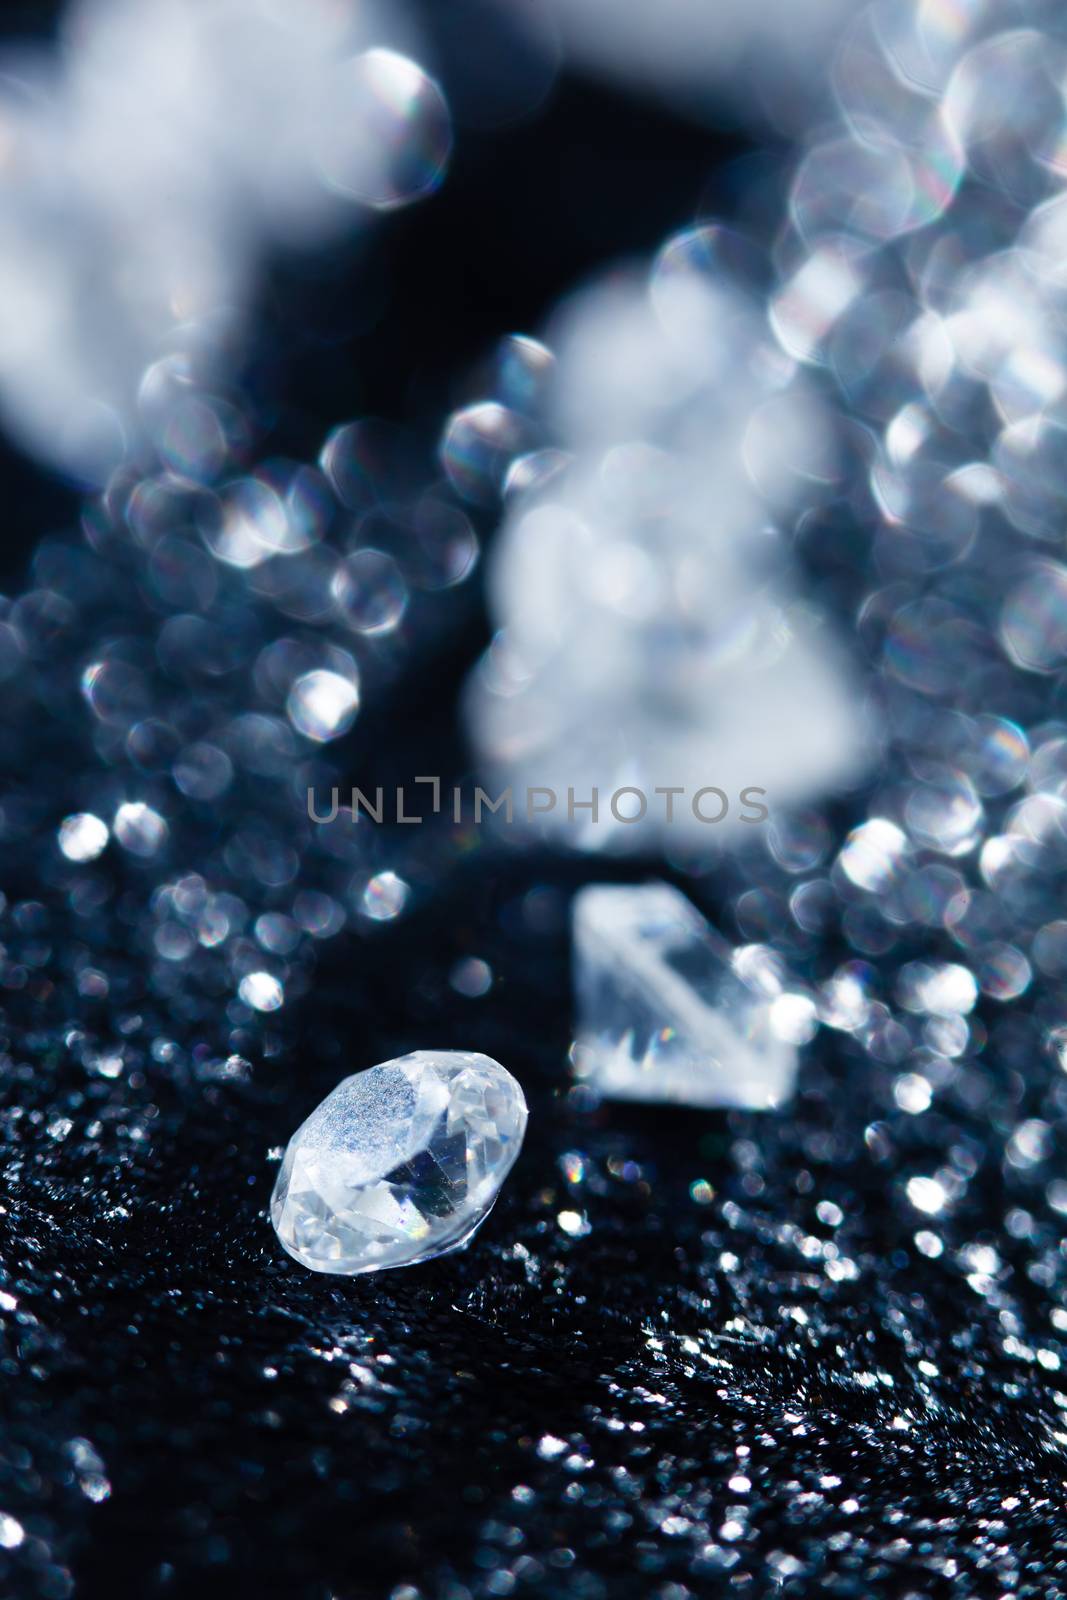 diamonds on black background by shebeko